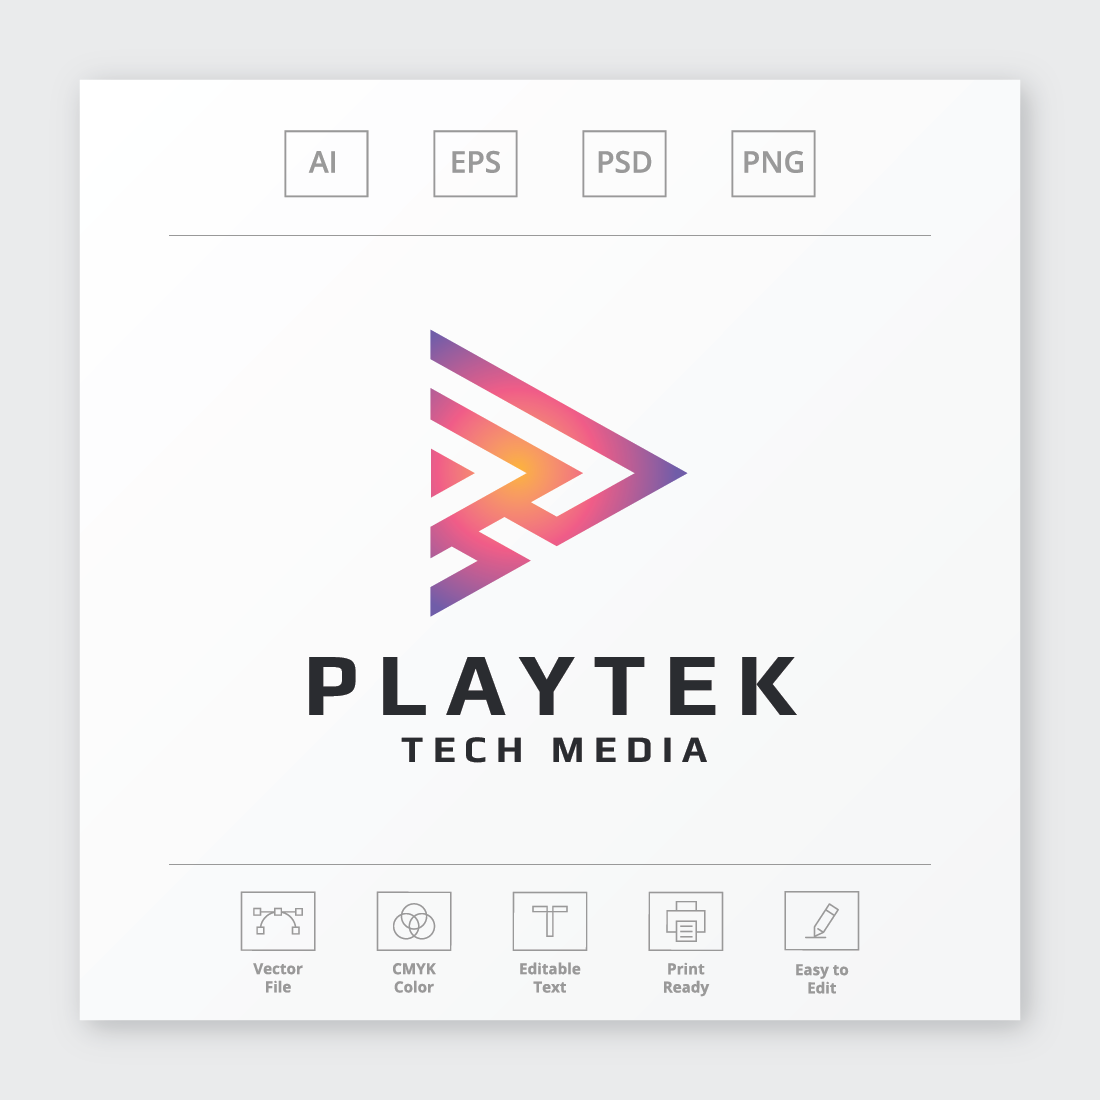 Playtek Media Play Logo cover image.